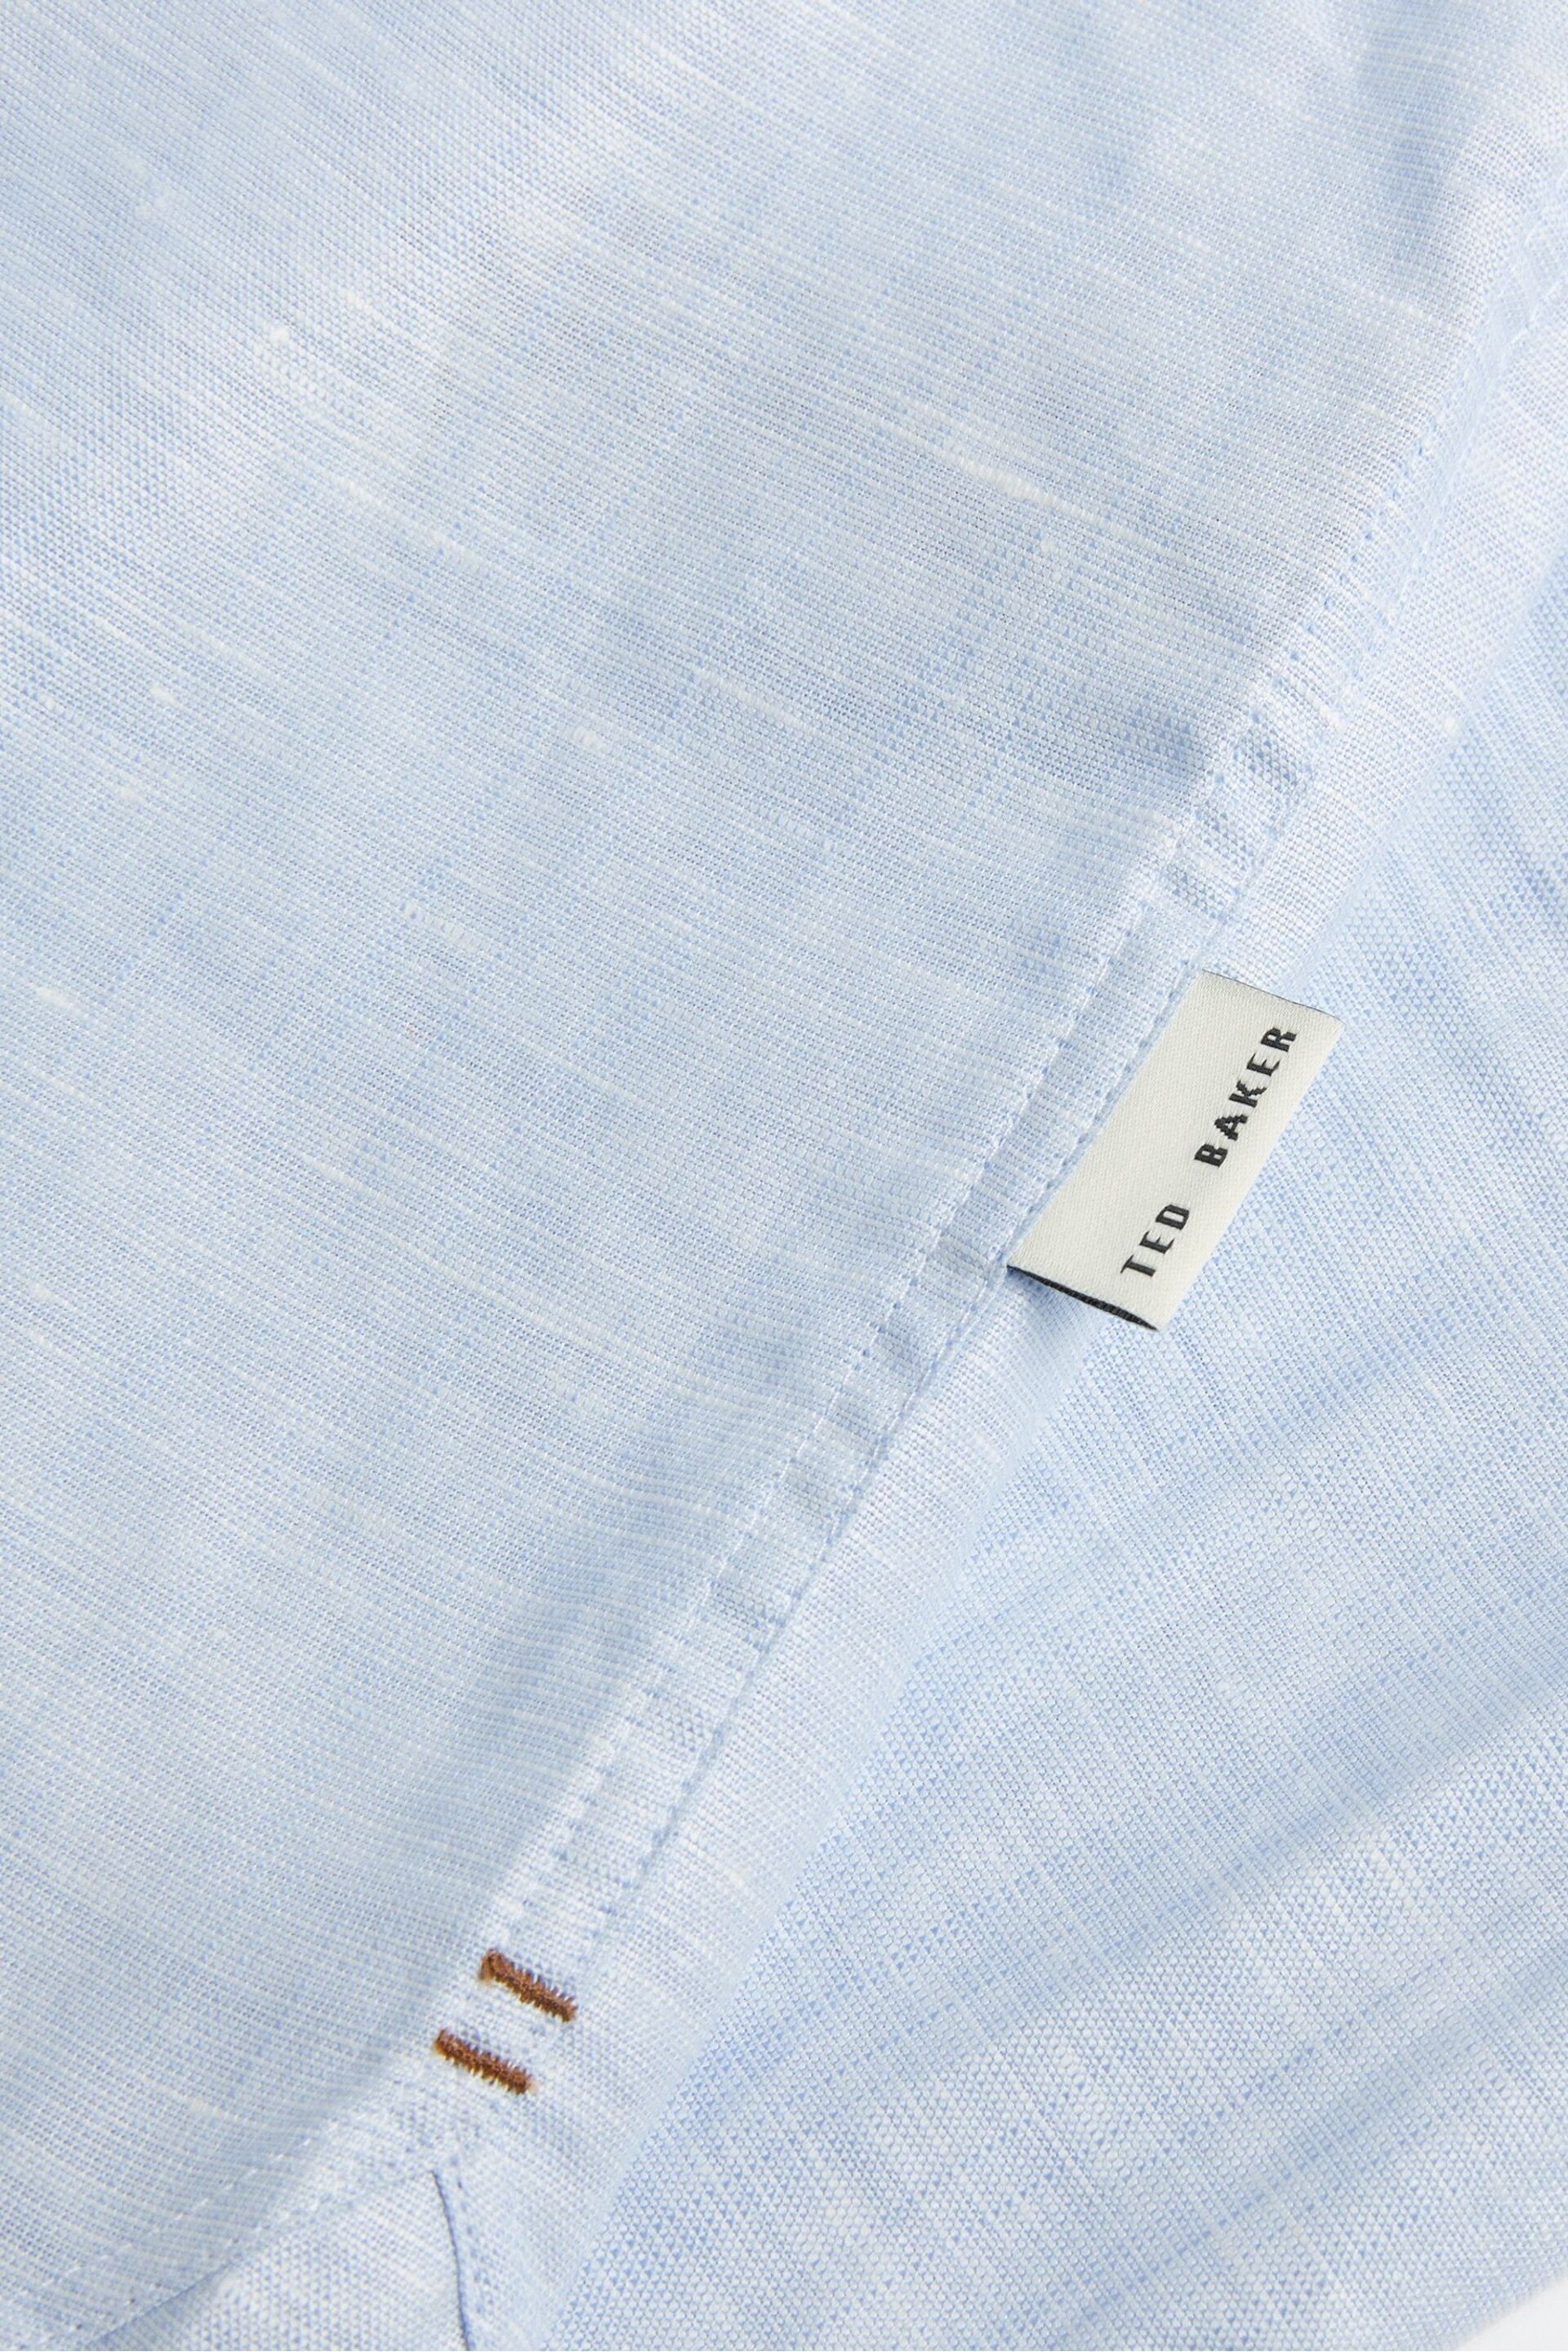 Ted Baker Blue Romeos Linen Shirt - Image 3 of 6